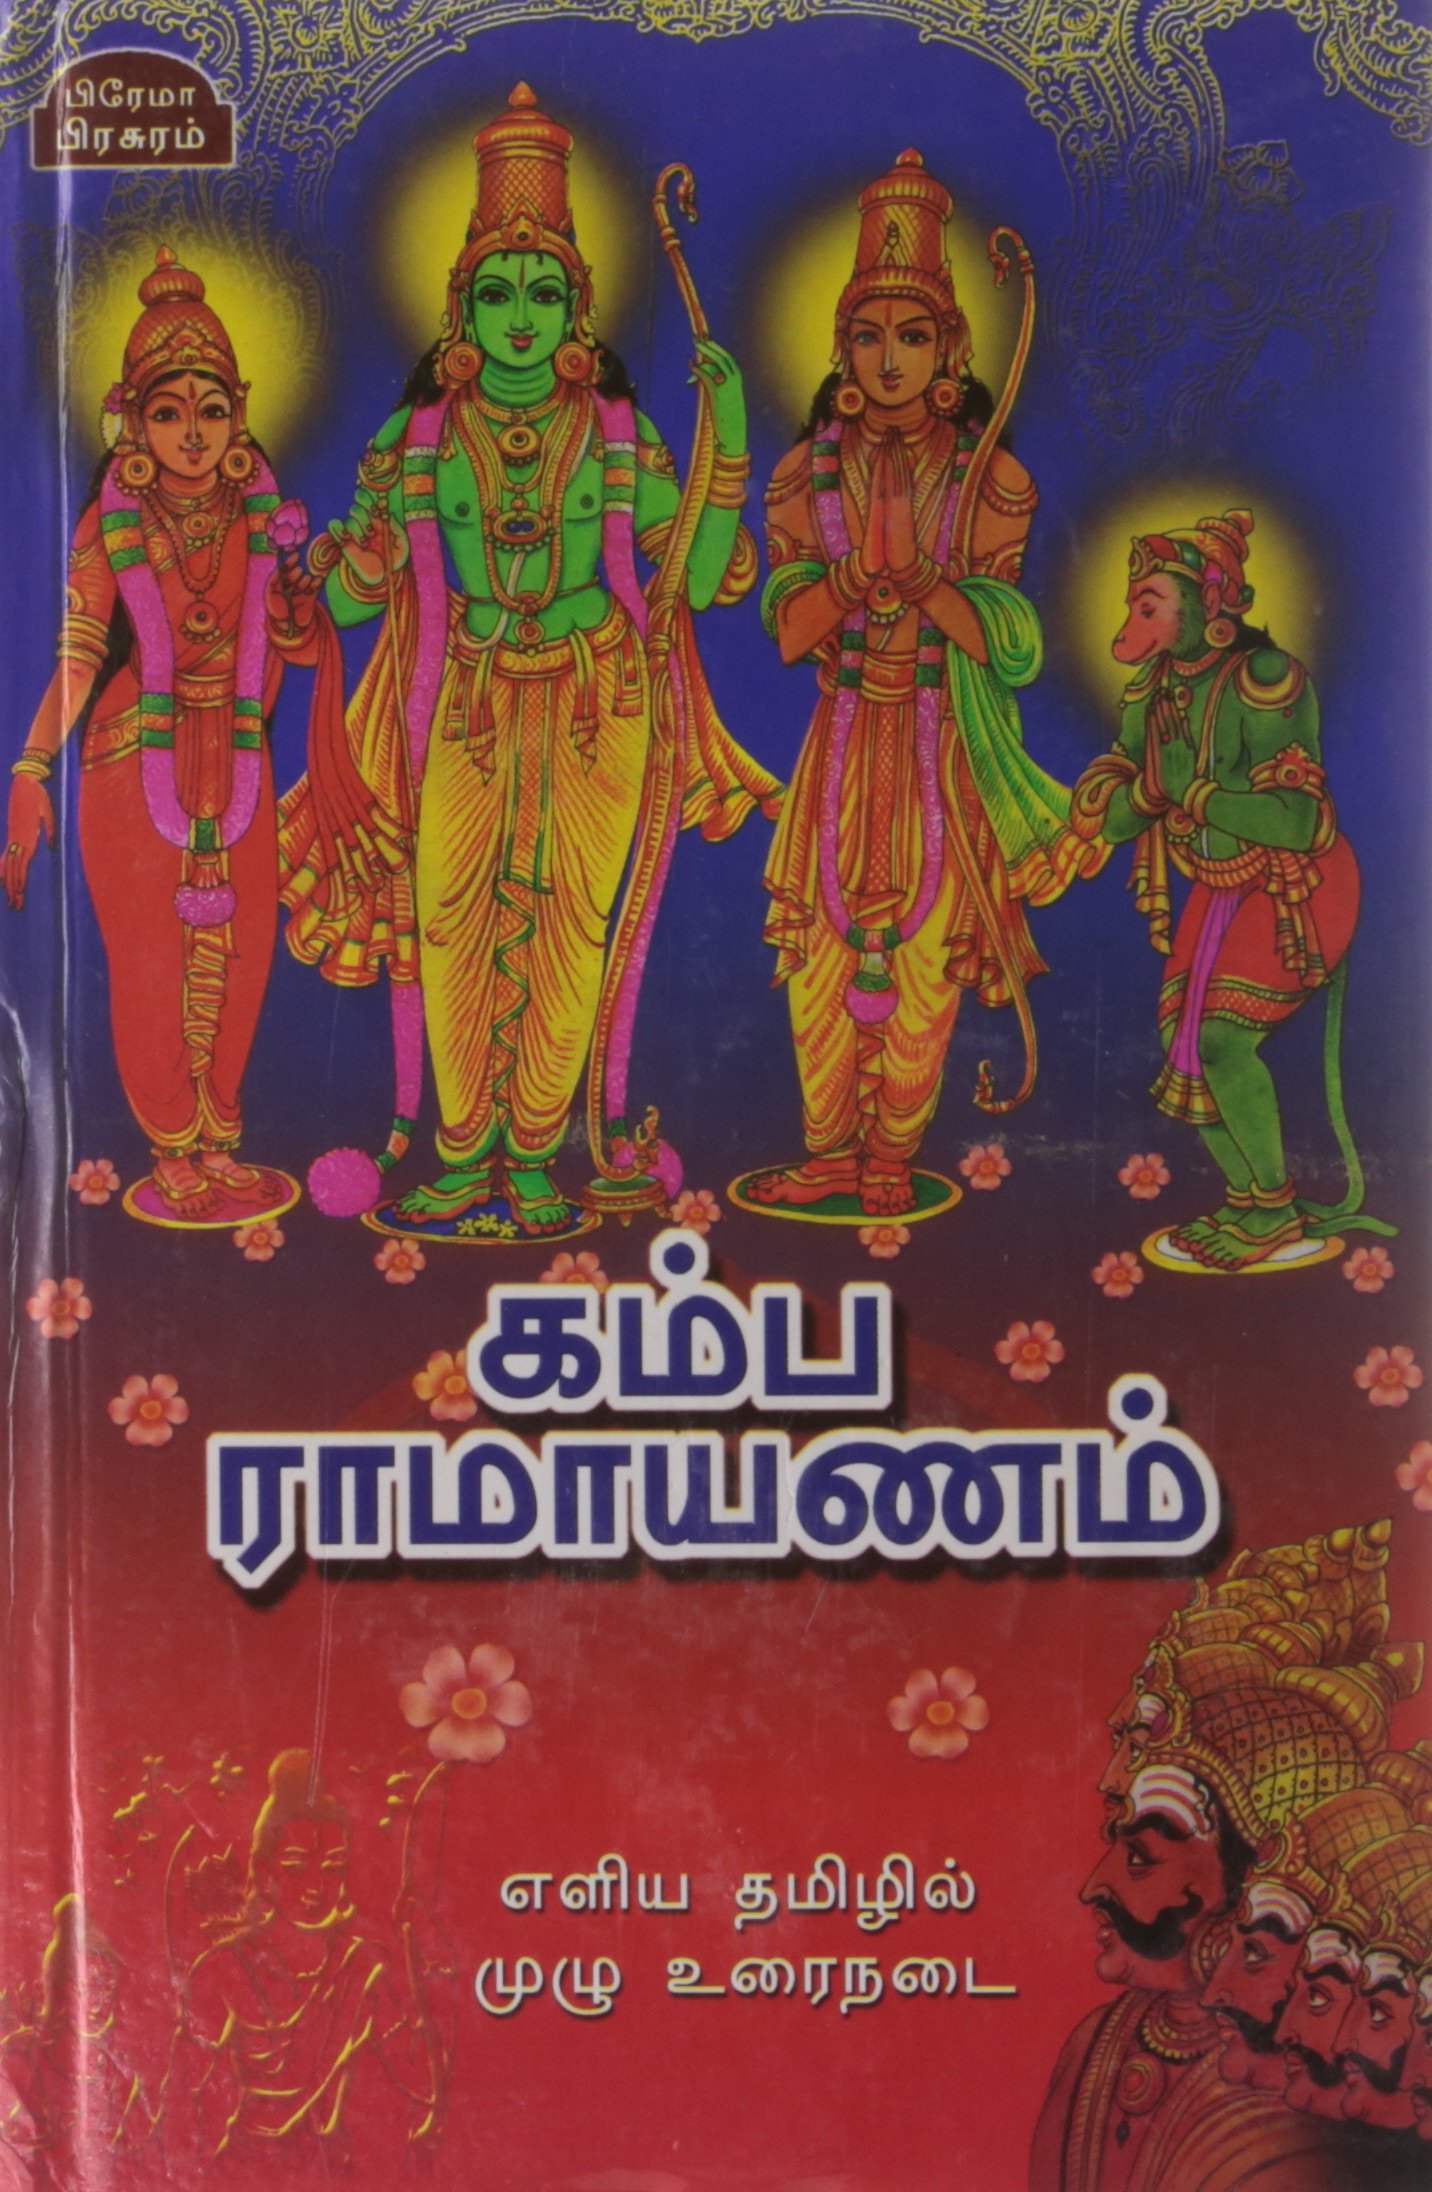 Ramayanam story in telugu pdf free download